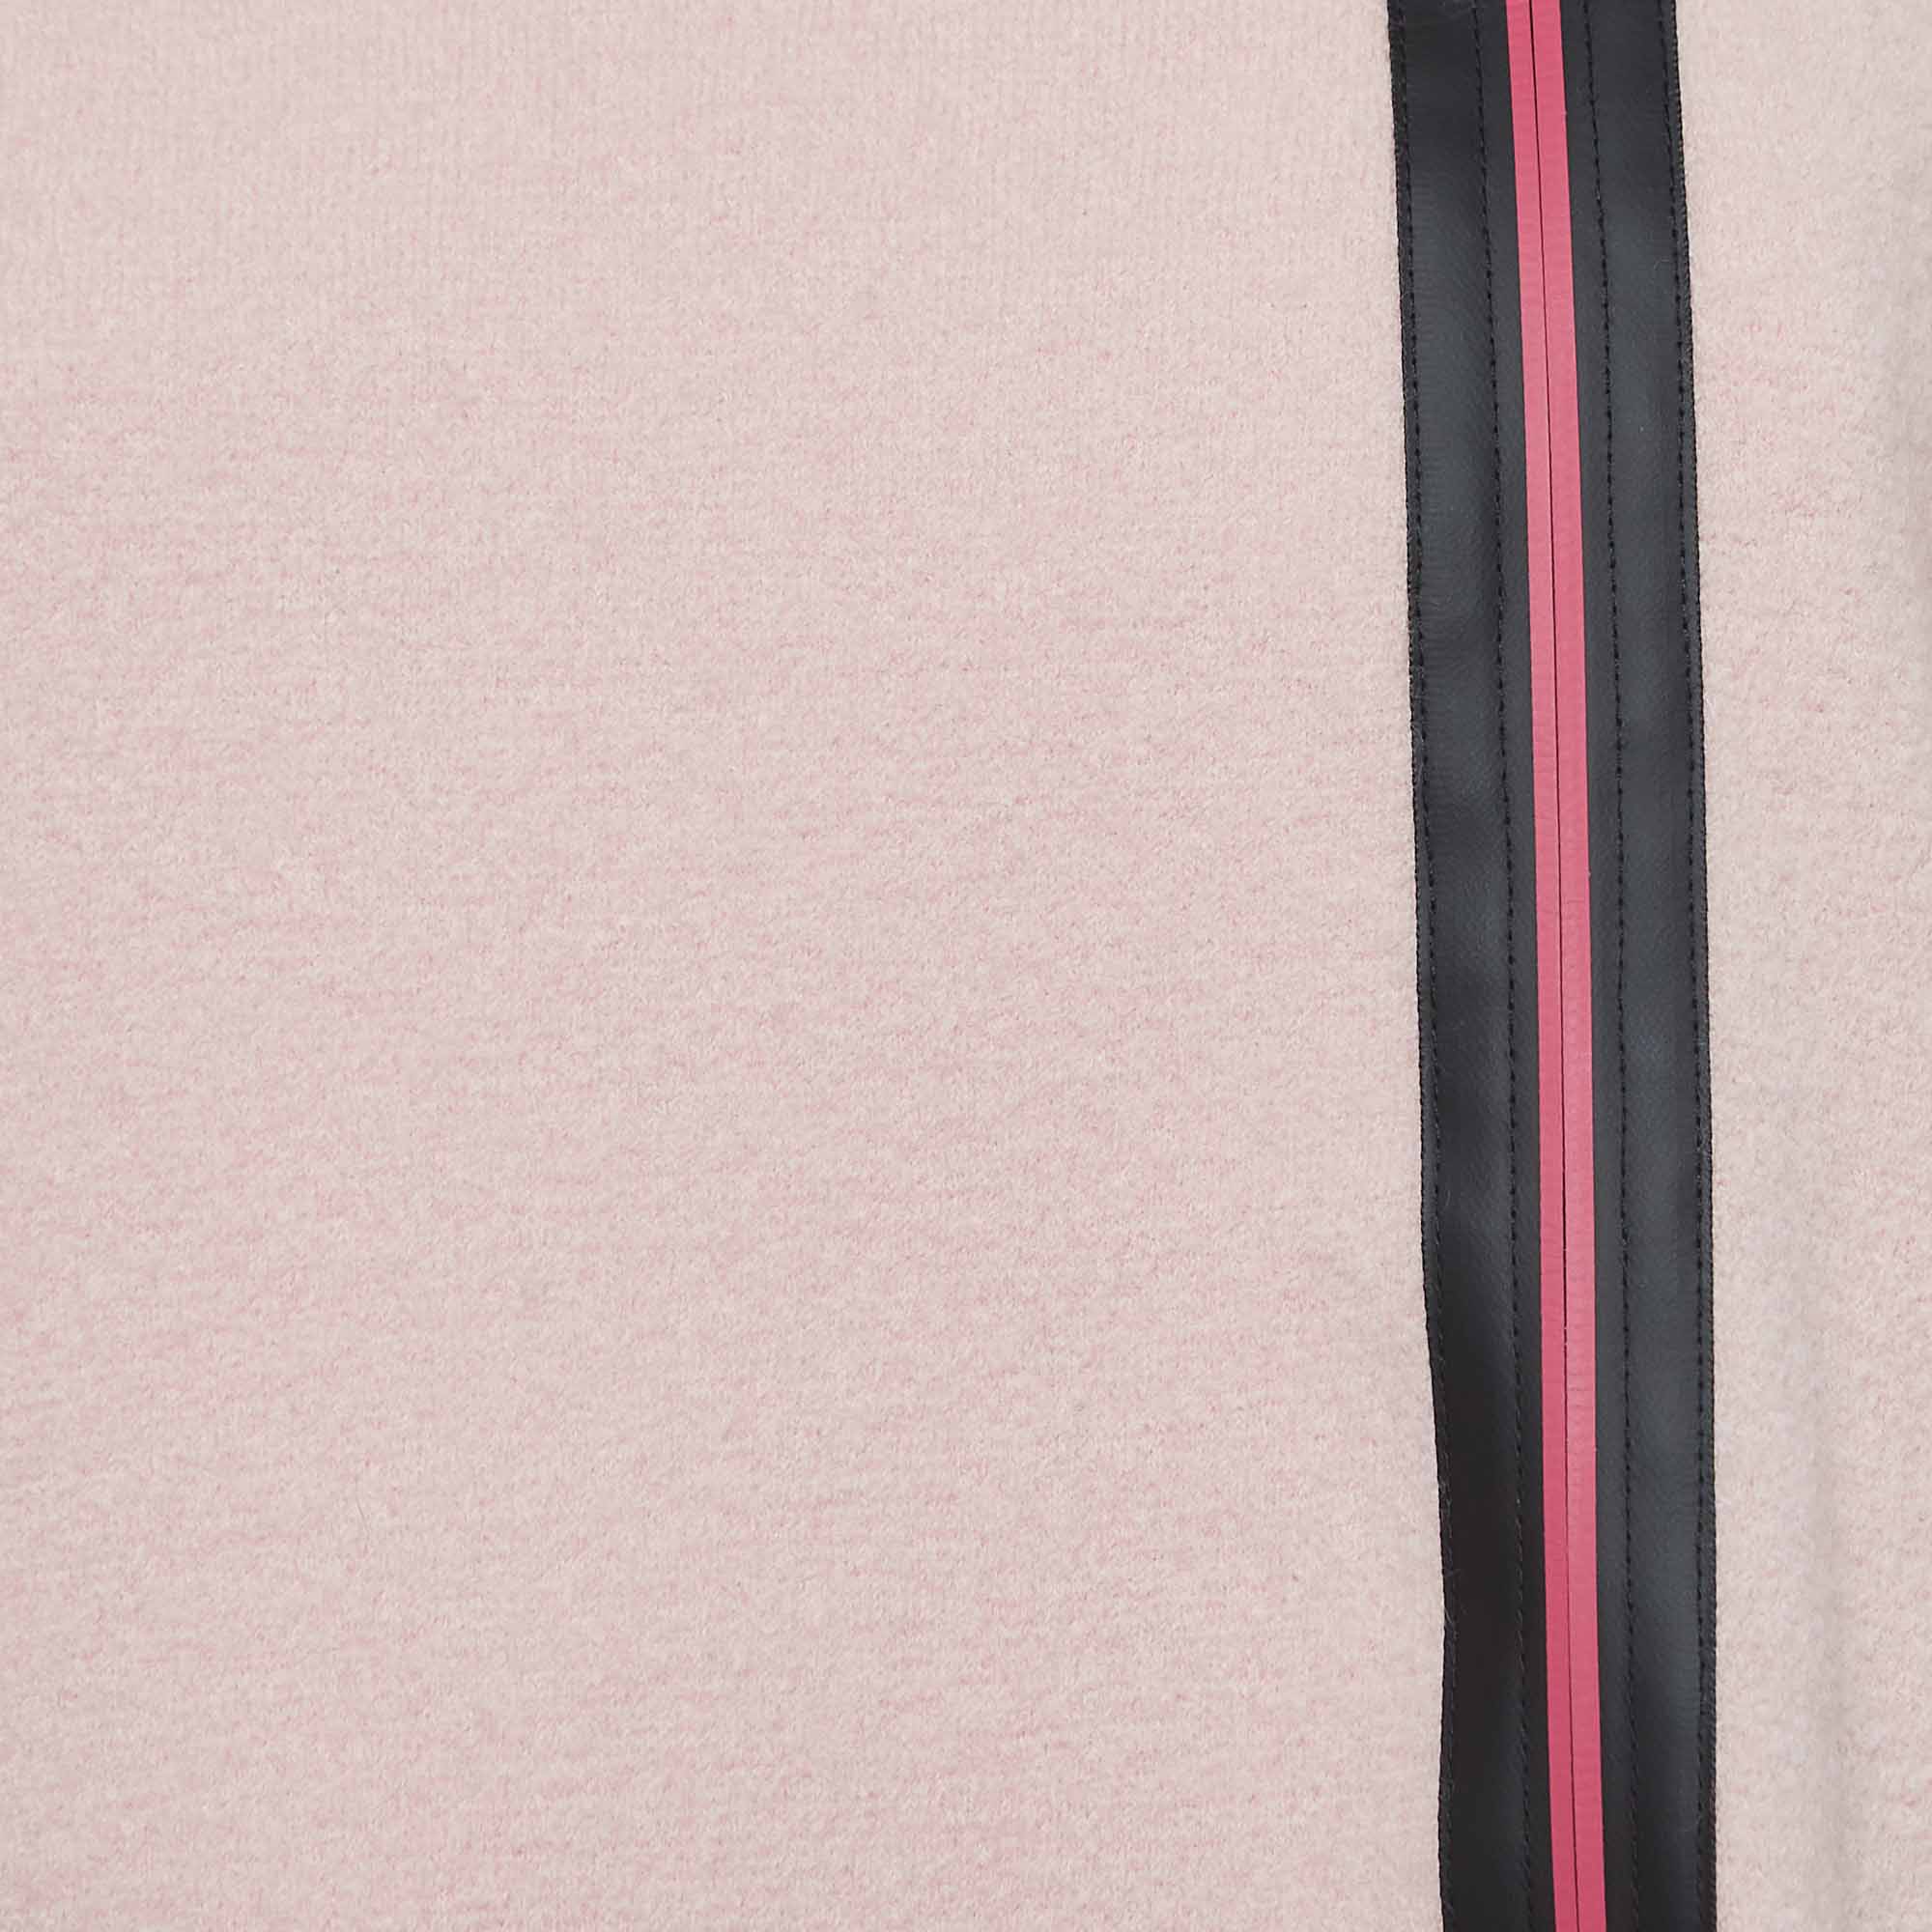 Emporio Armani Light Pink Wool Blend Zip Front Mid-Length Coat XS